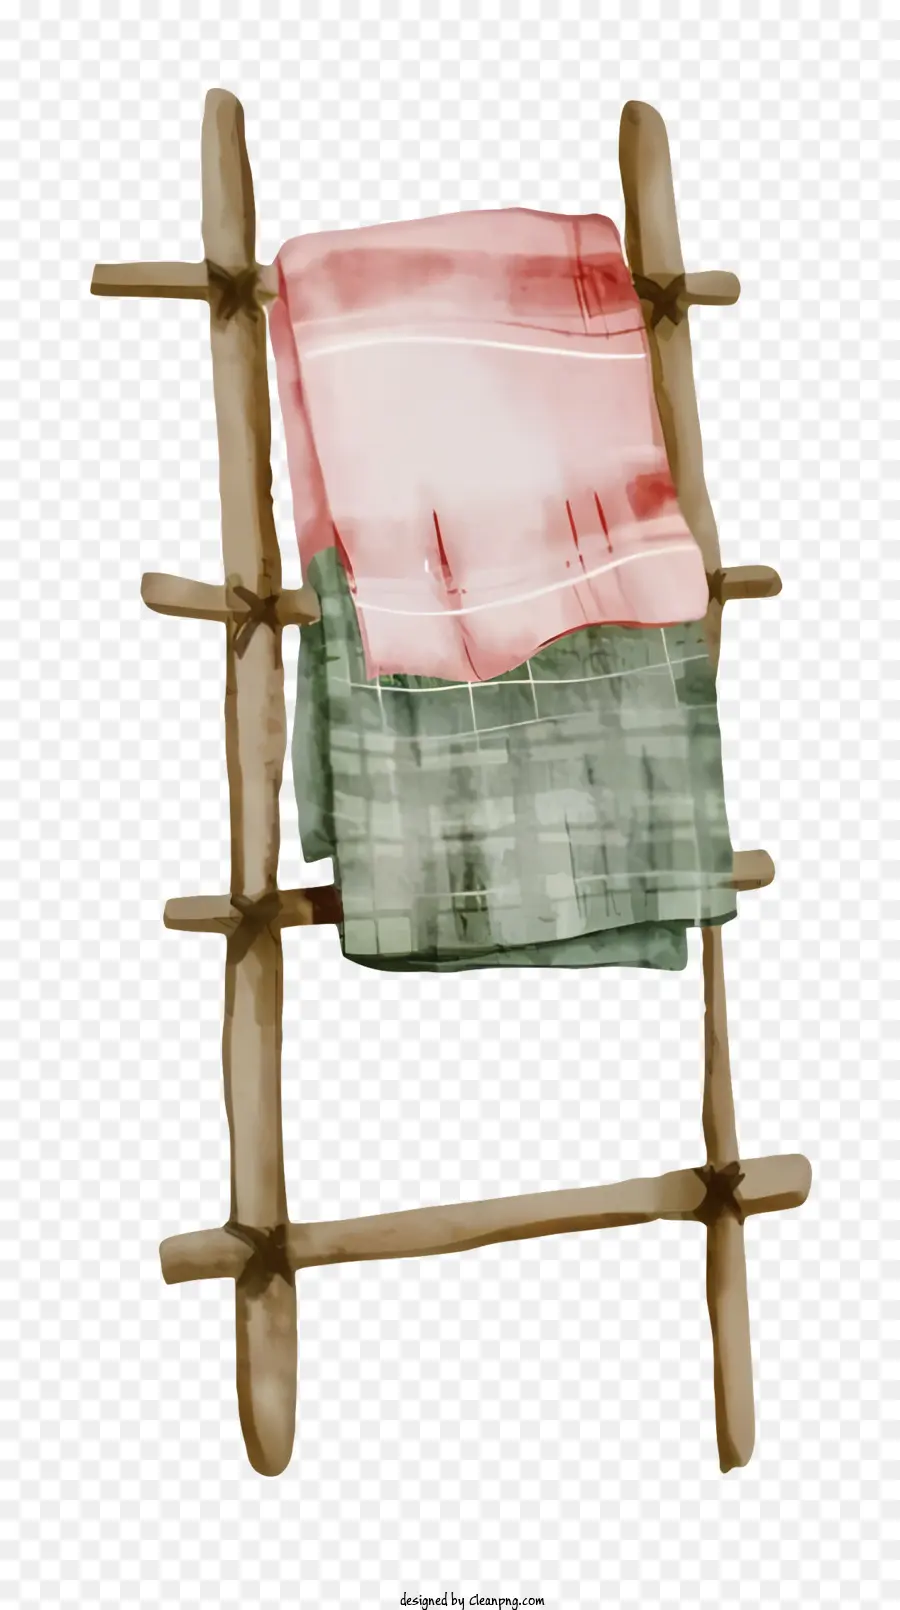 wooden clothesline red towel green towel black striped towel backyard clothesline